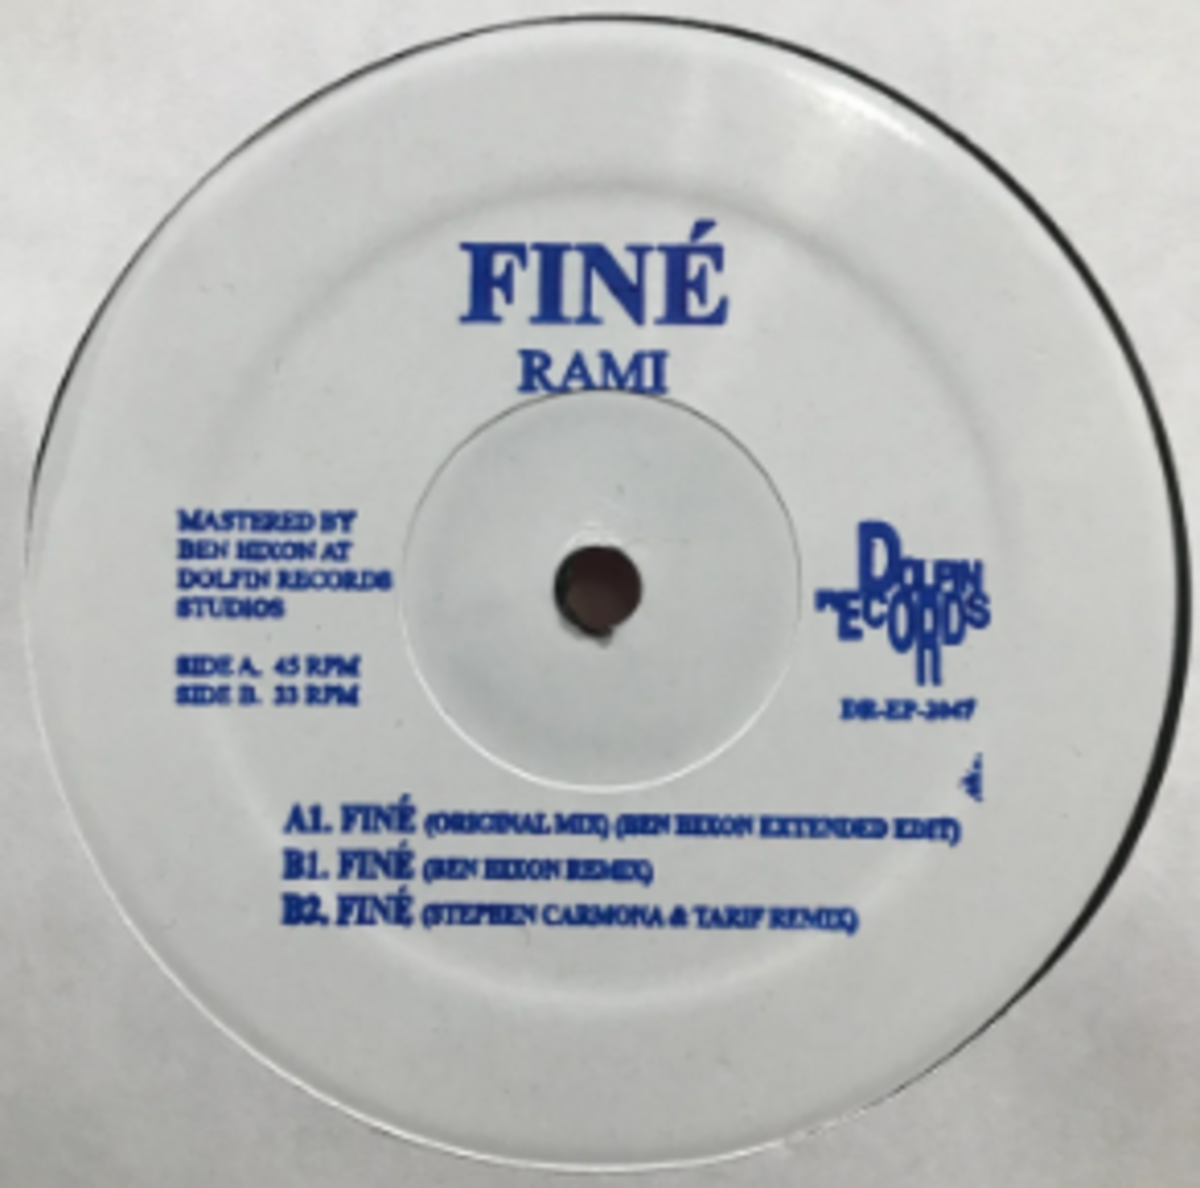 8. "Fine (Ben Hixon Extended Edit)" - Rami [Dolfin Records]